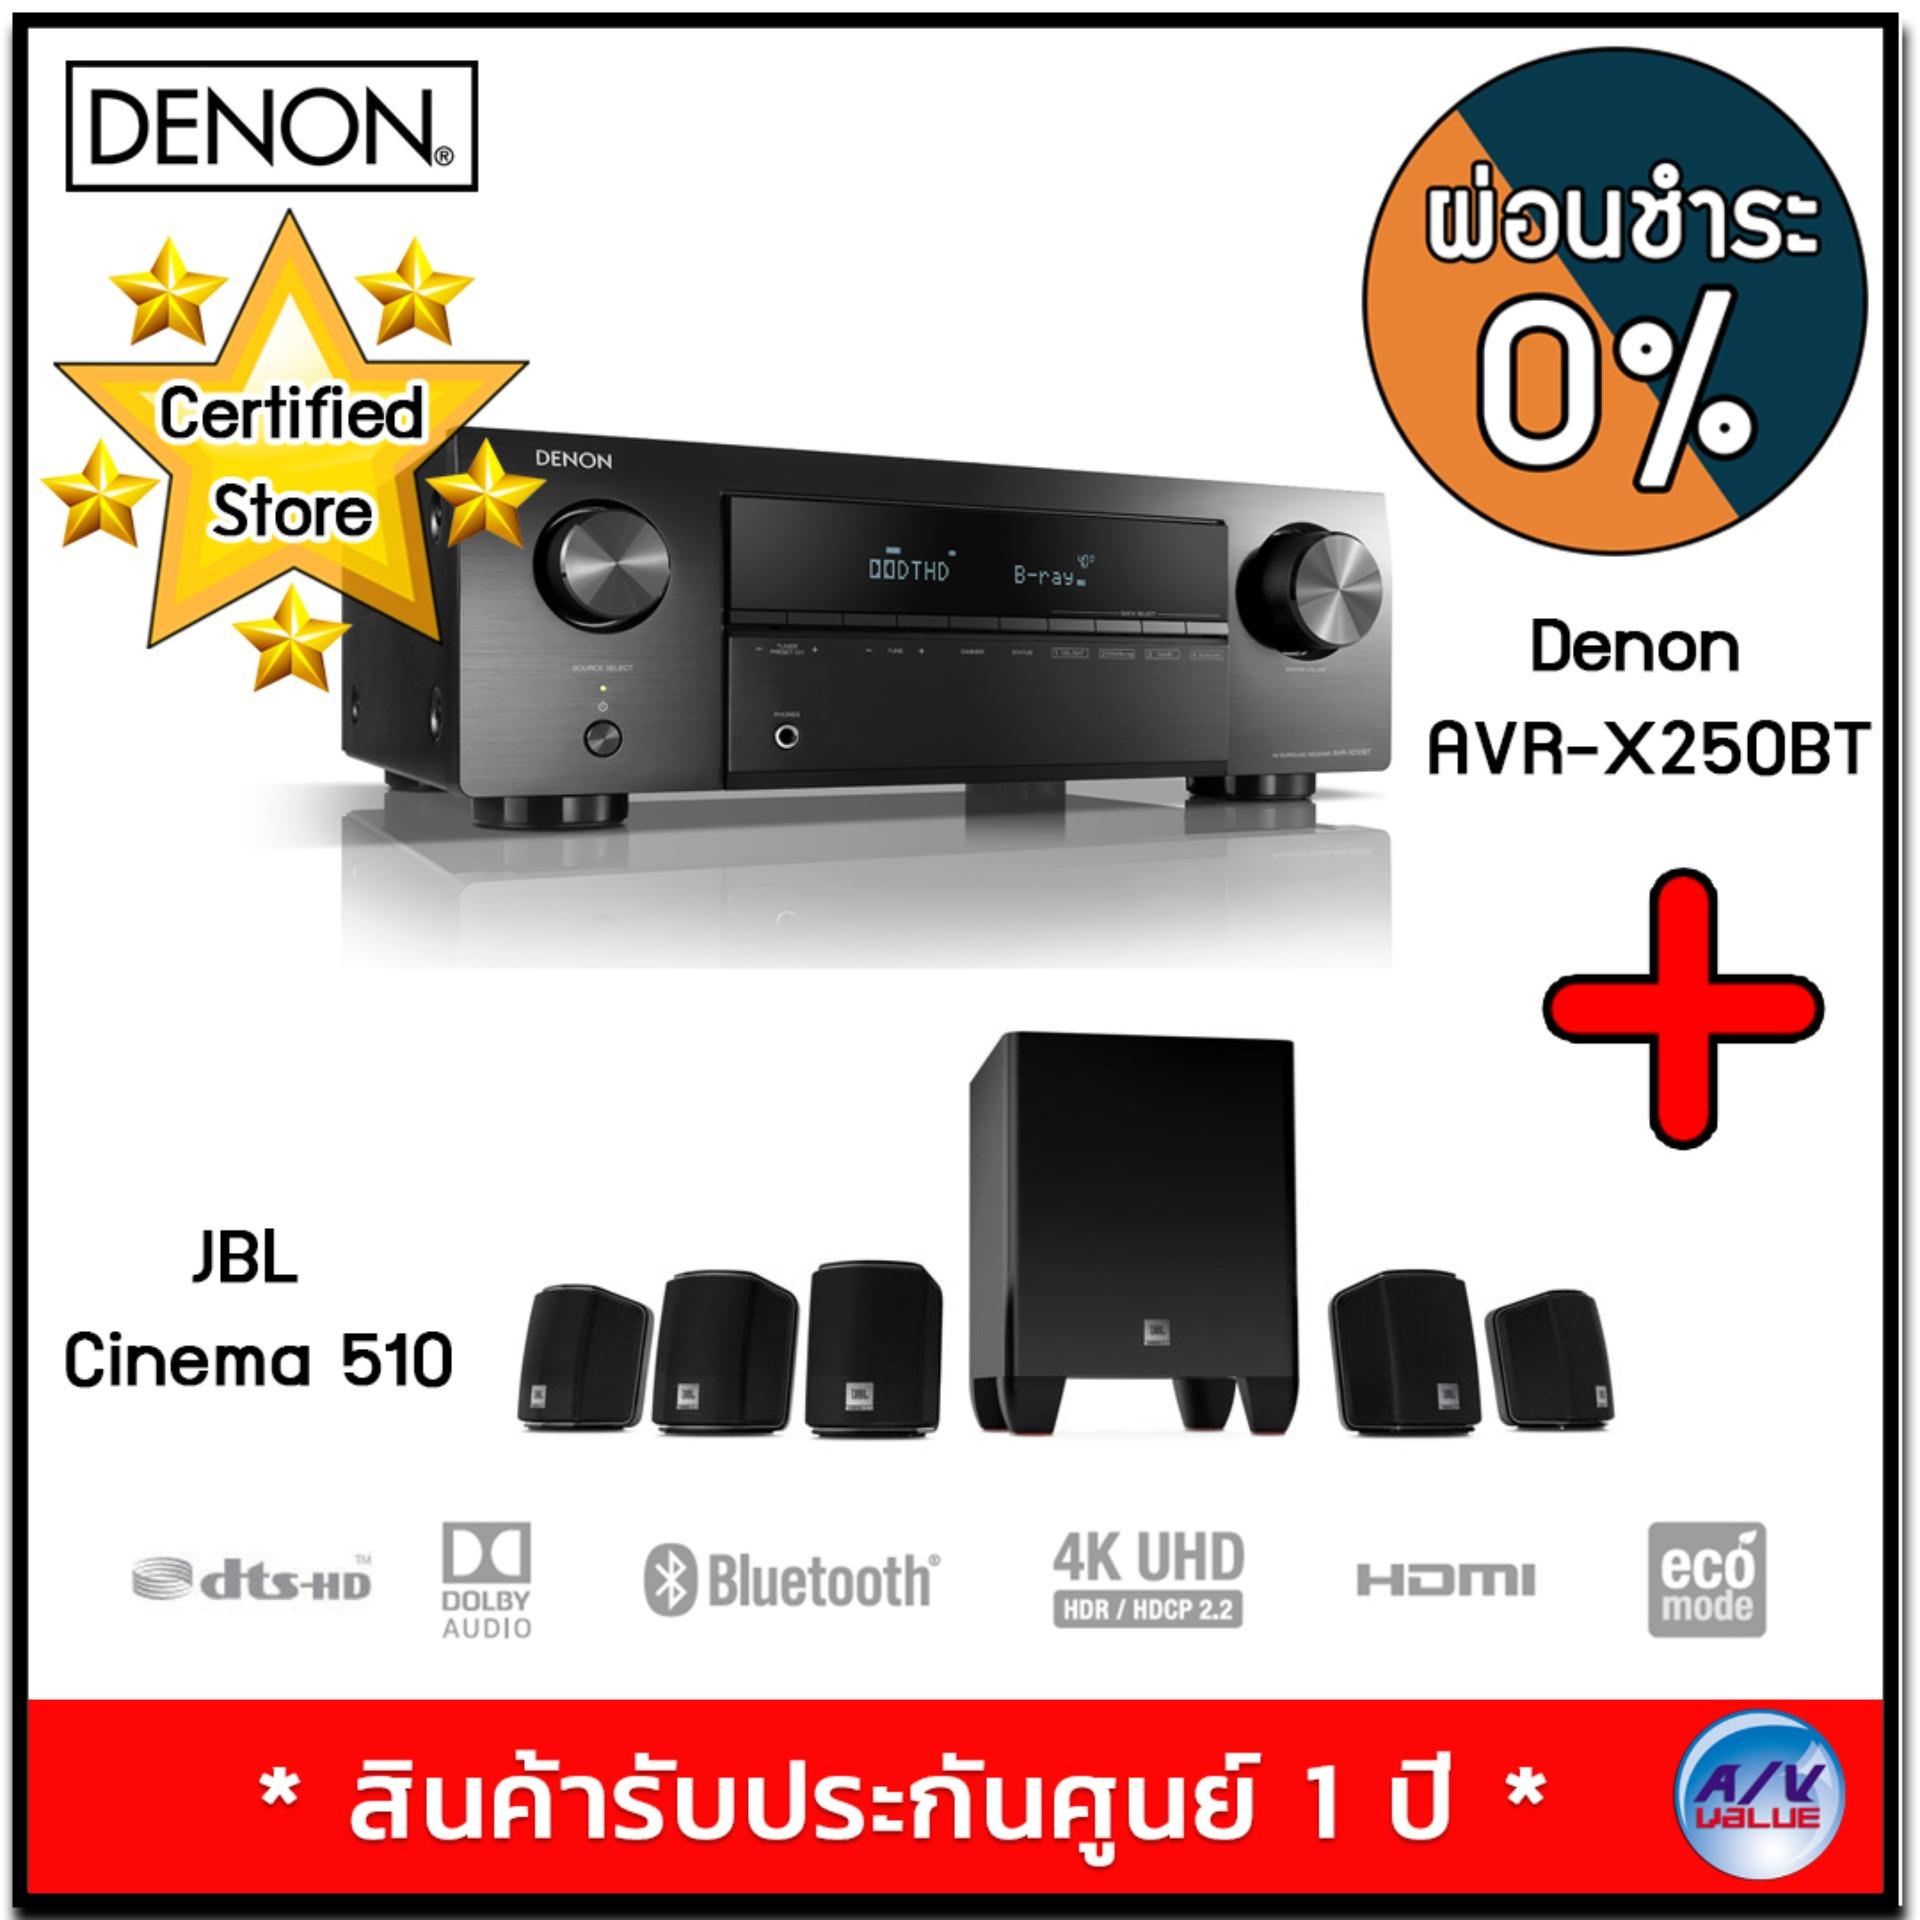 Denon AVR-X250BT 5.1 Ch. 4K Ultra HD AV Receiver with Bluetooth + JBL Cinema 510